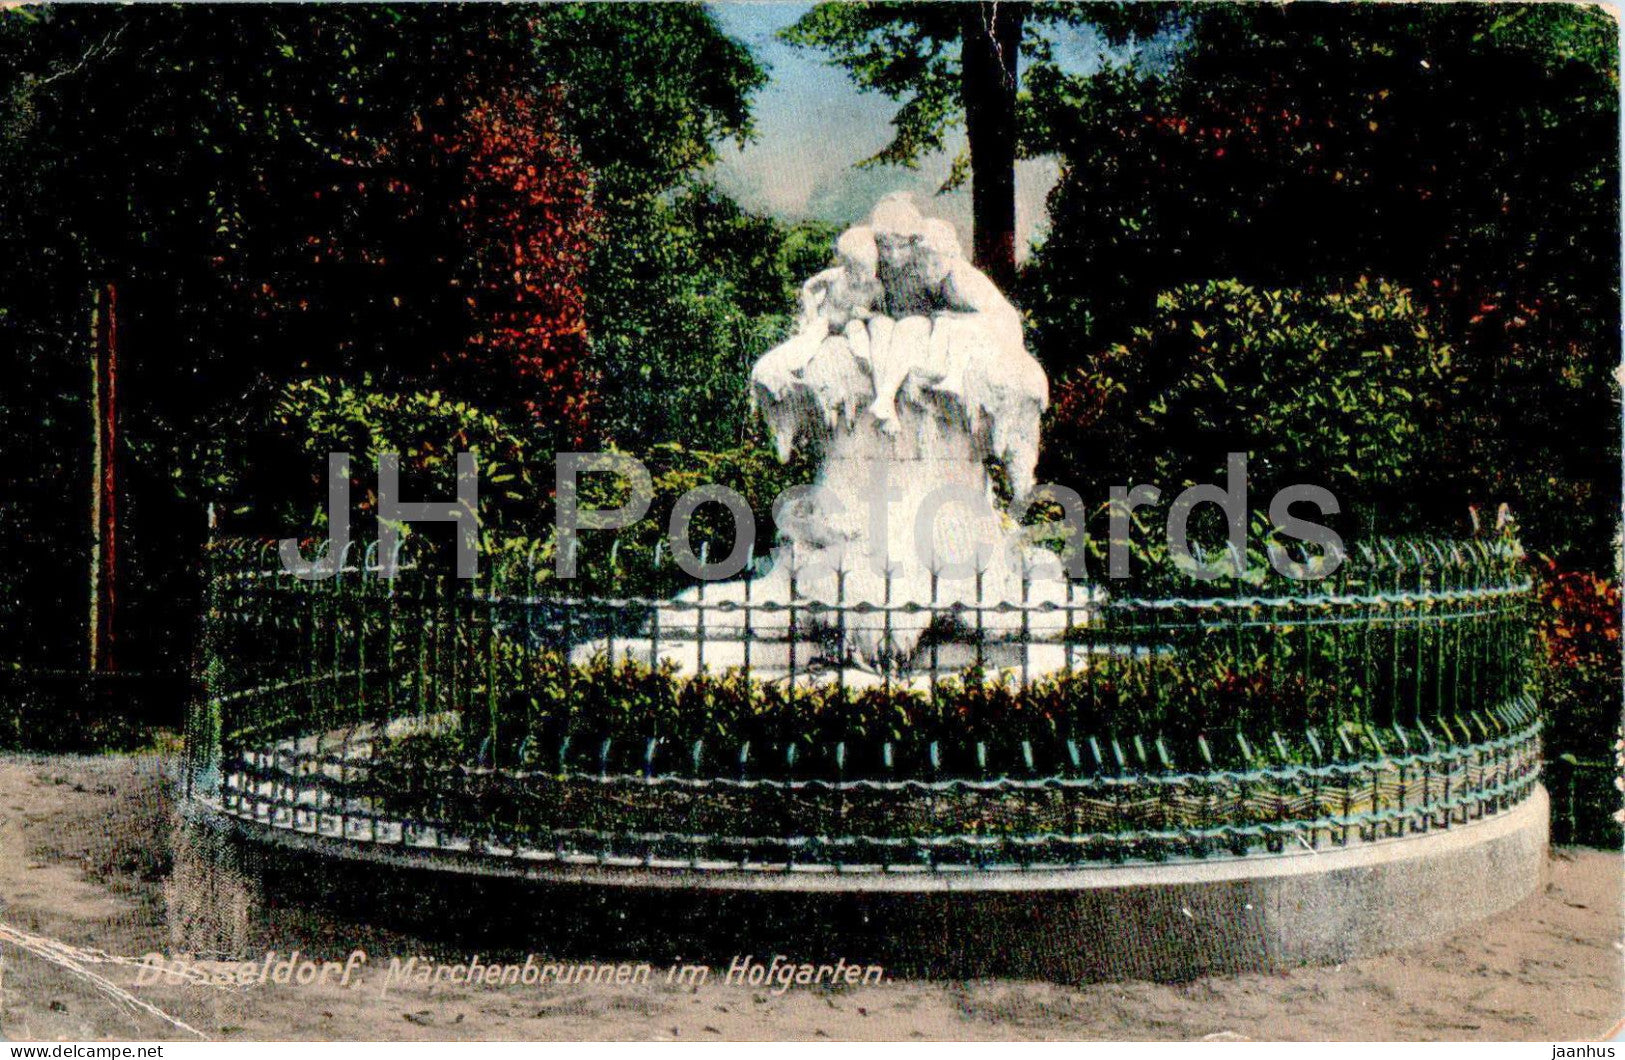 Dusseldorf - Marchenbrunnen im Hofgarten - 2769 - Germany - used - JH Postcards